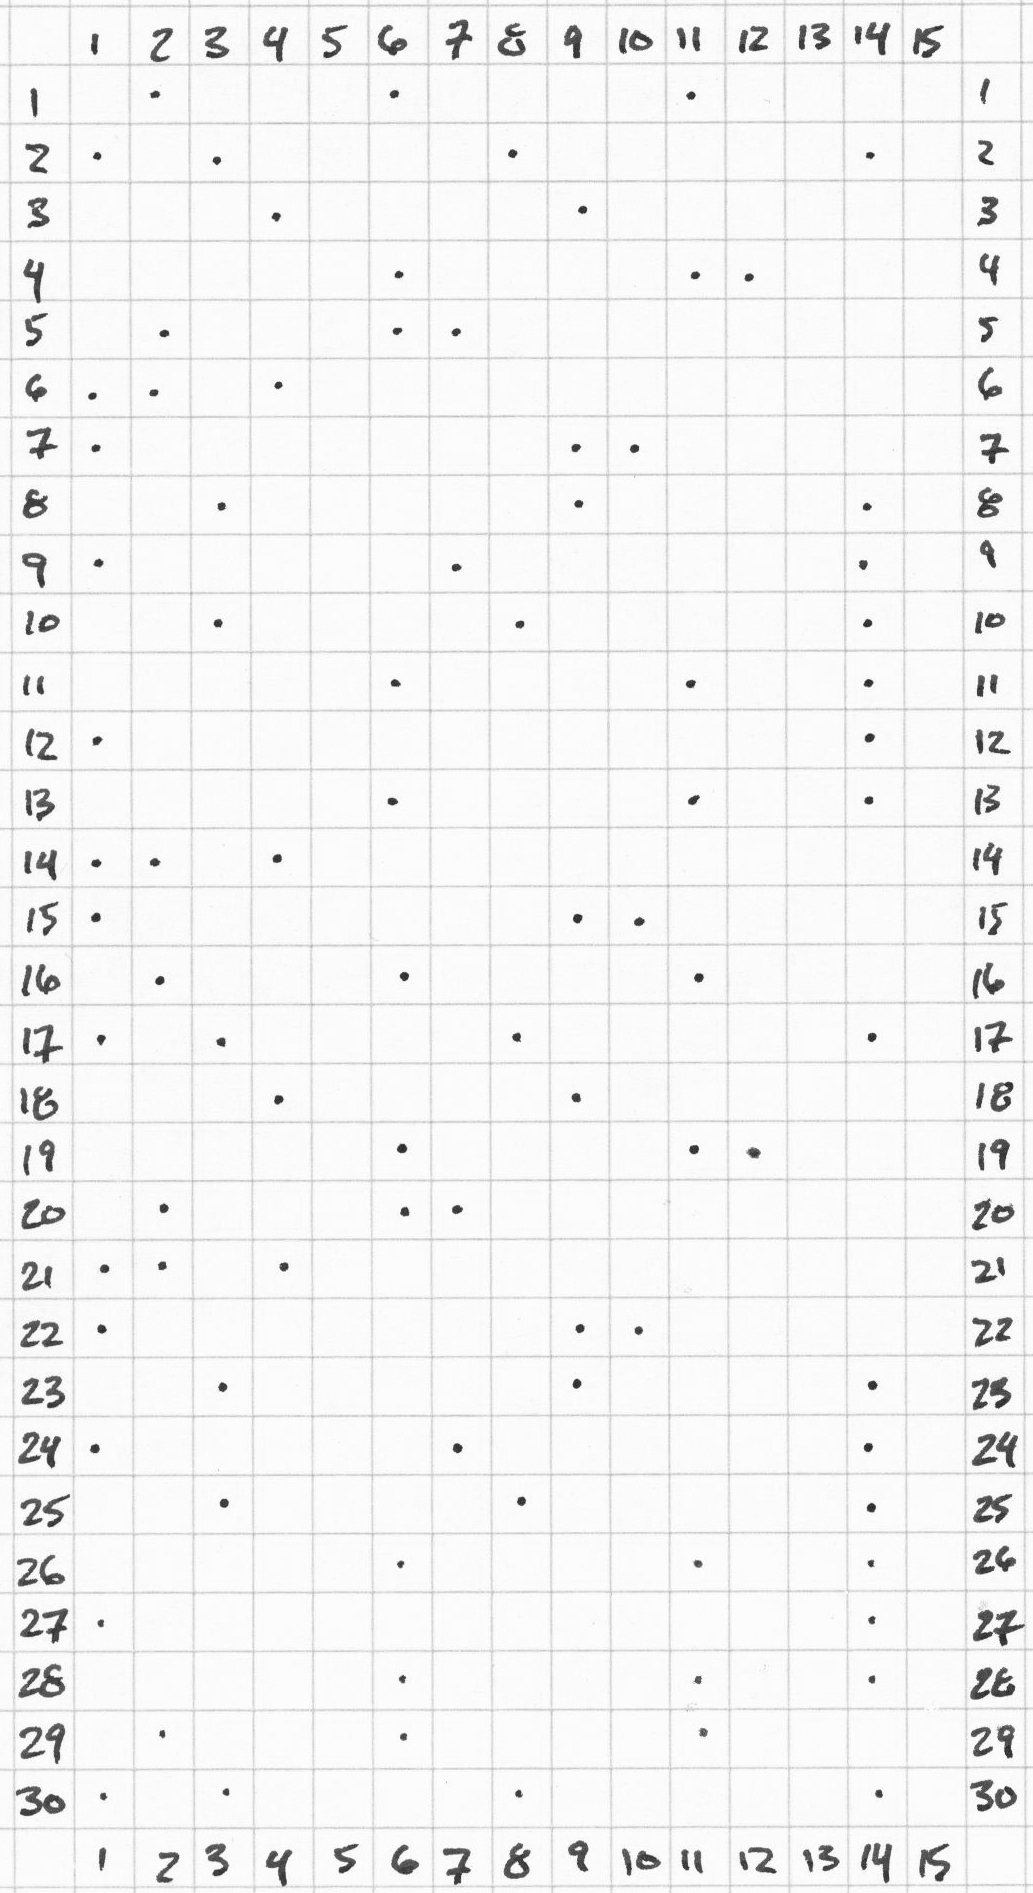 rama gottfried - envelopes for orchestra - event grid